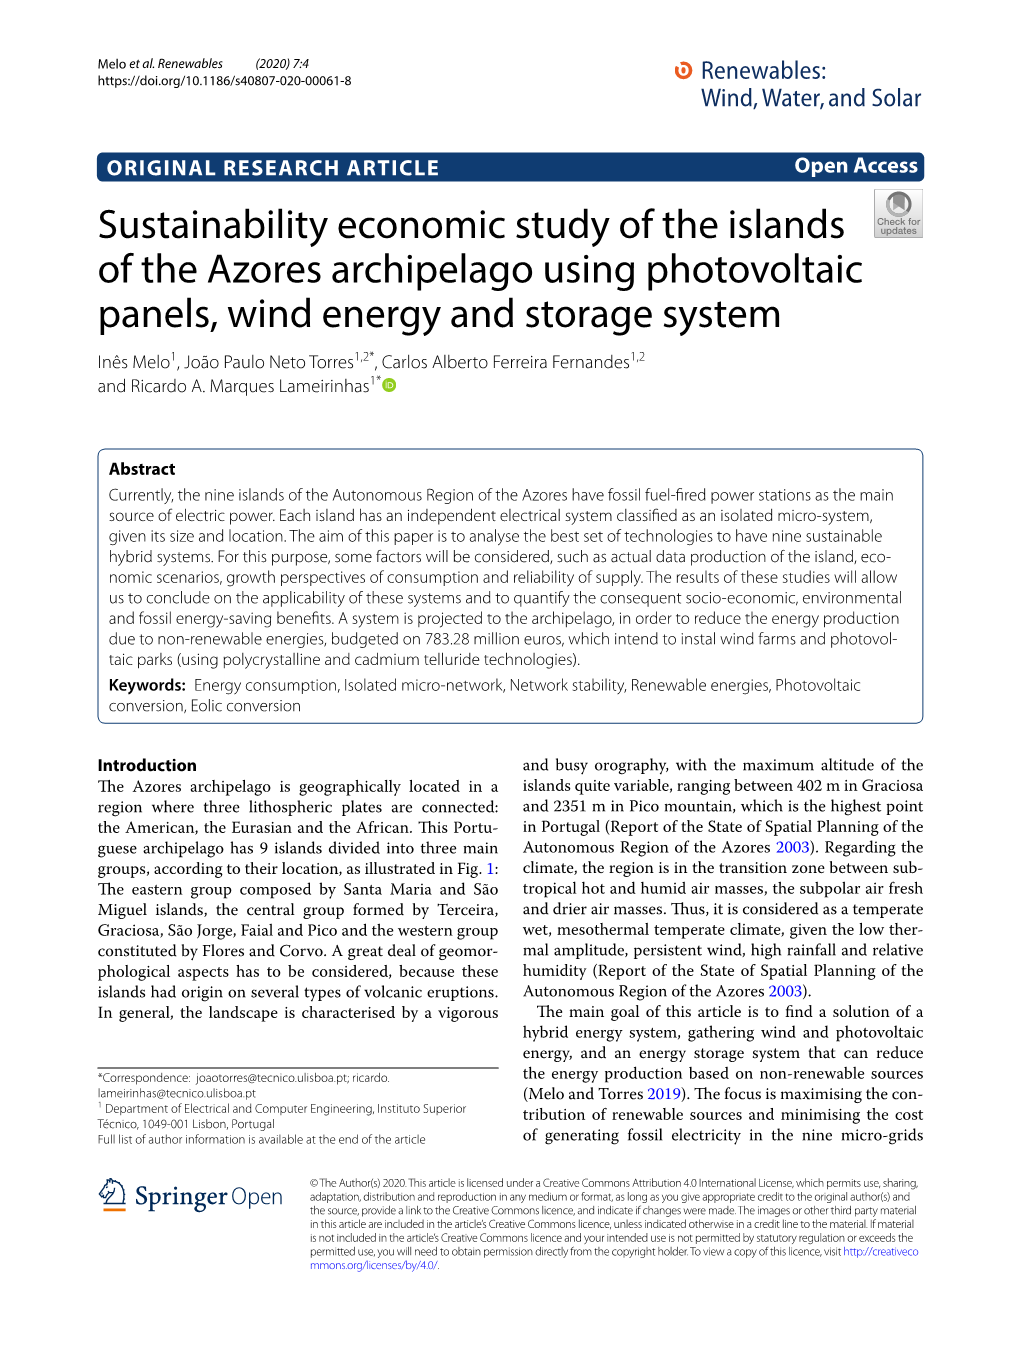 Sustainability Economic Study of the Islands of the Azores Archipelago